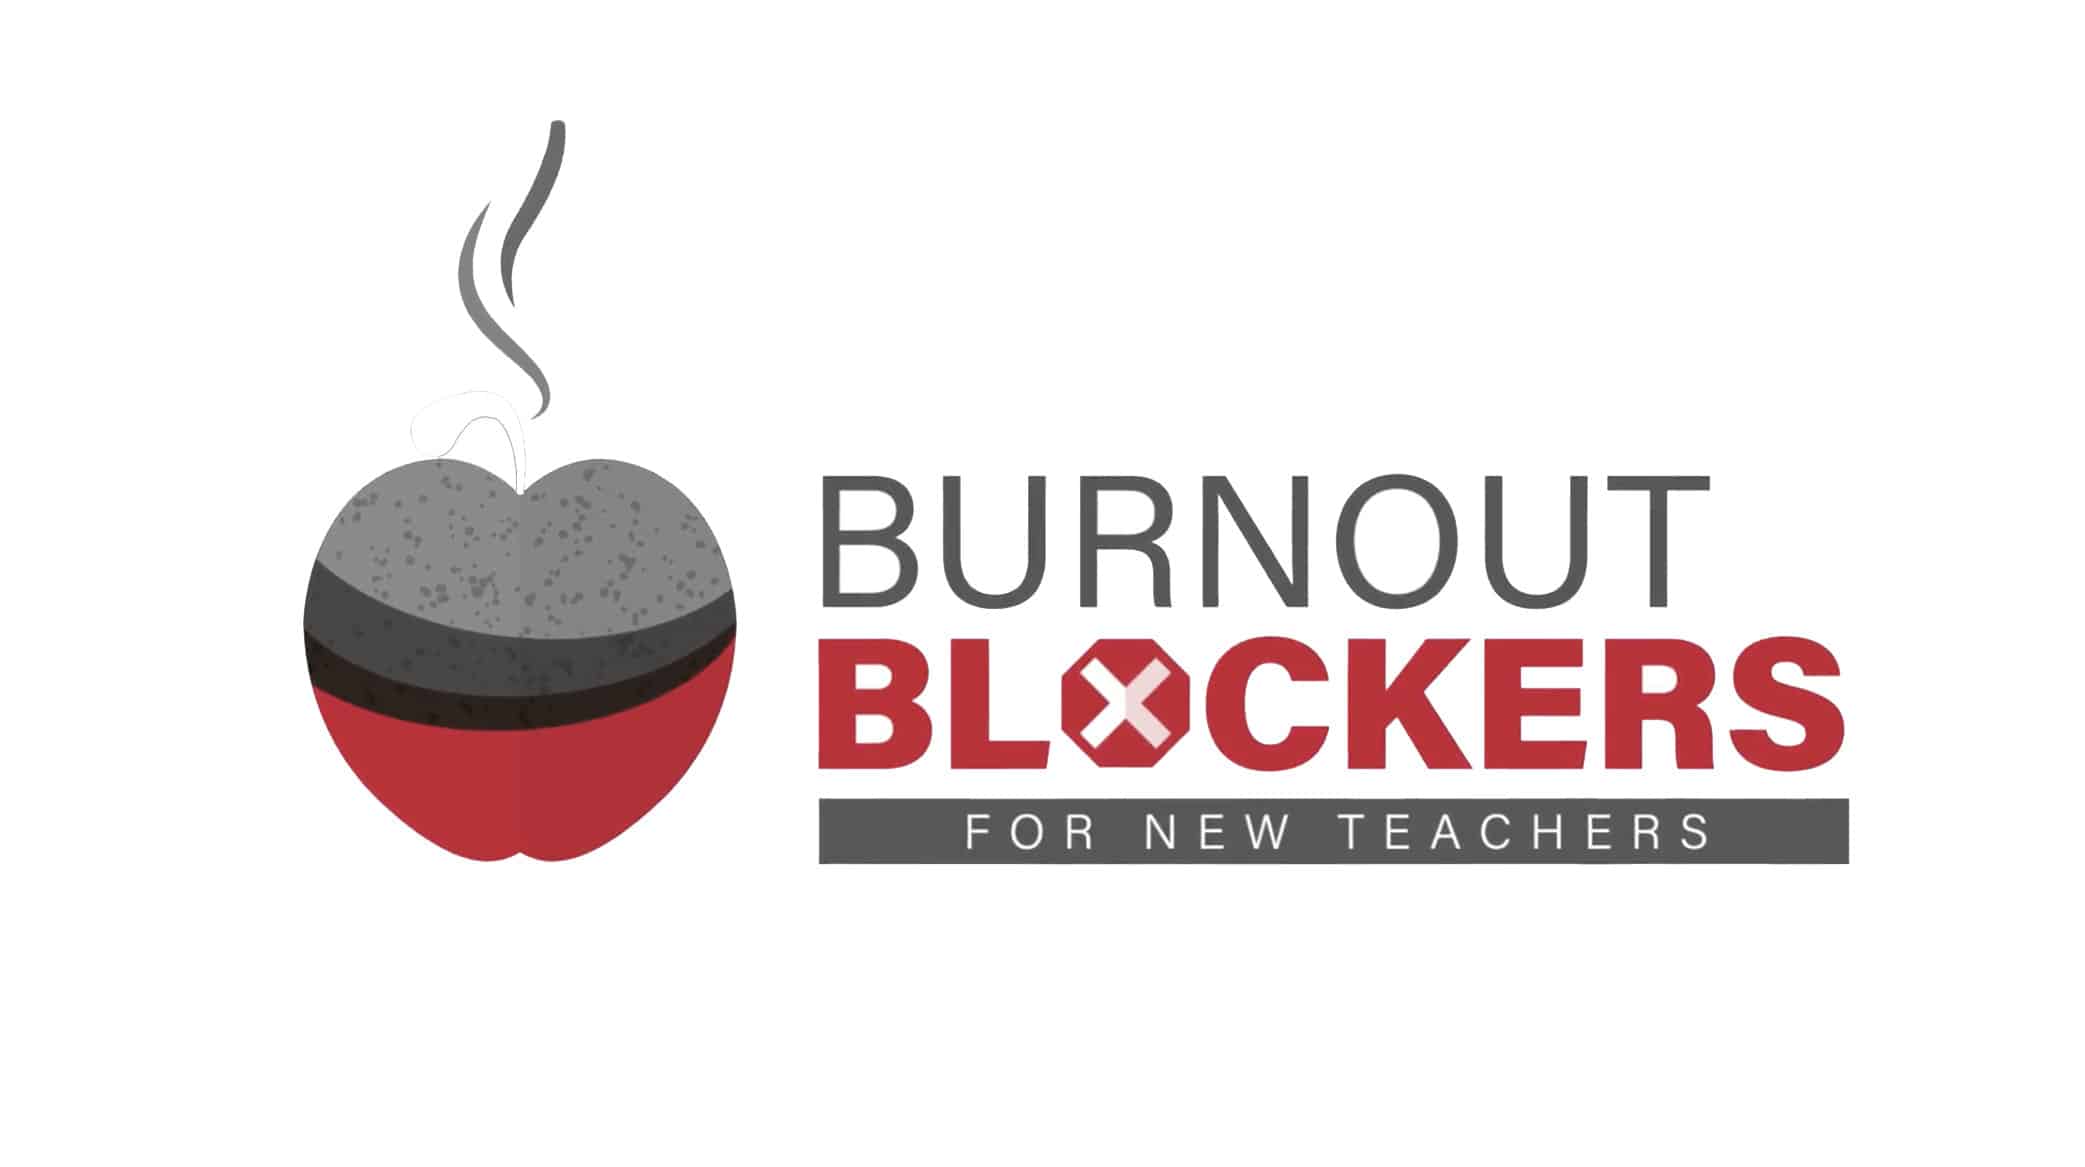 Burnout Blockers